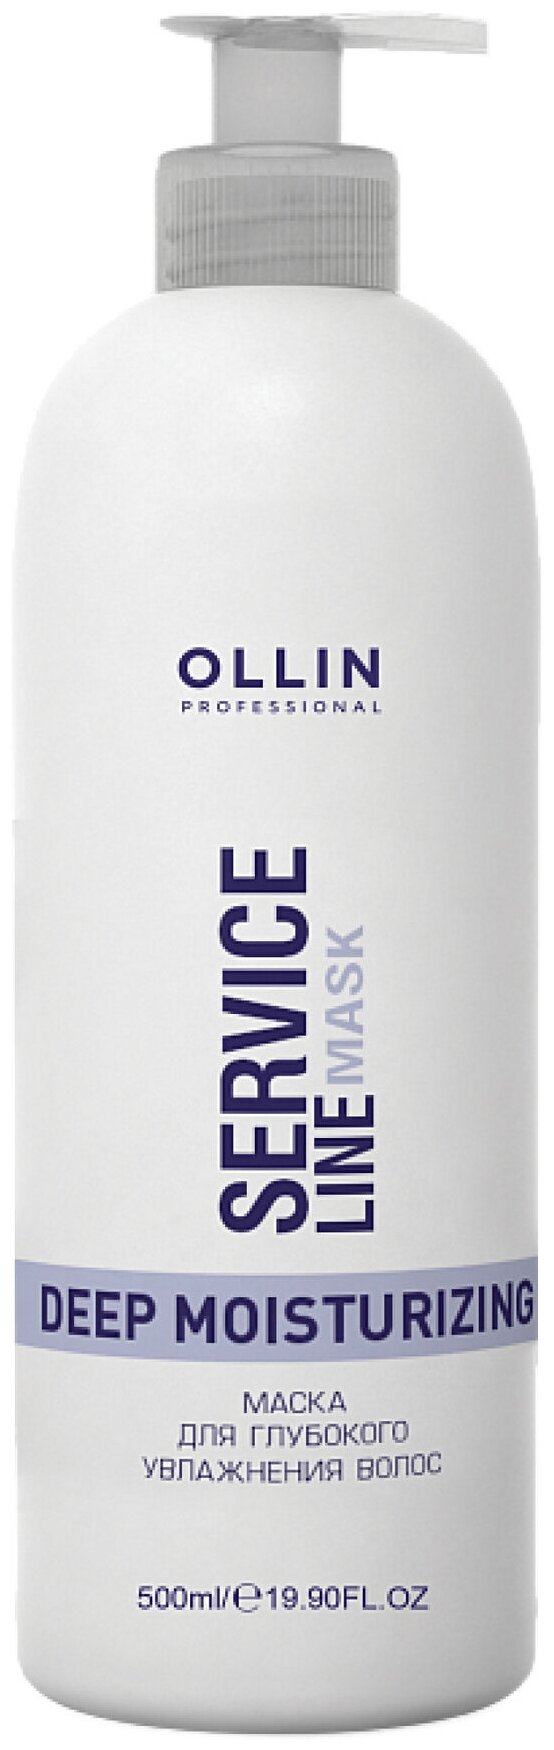 OLLIN Professional маска Service Line для глубокого увлажнения волос